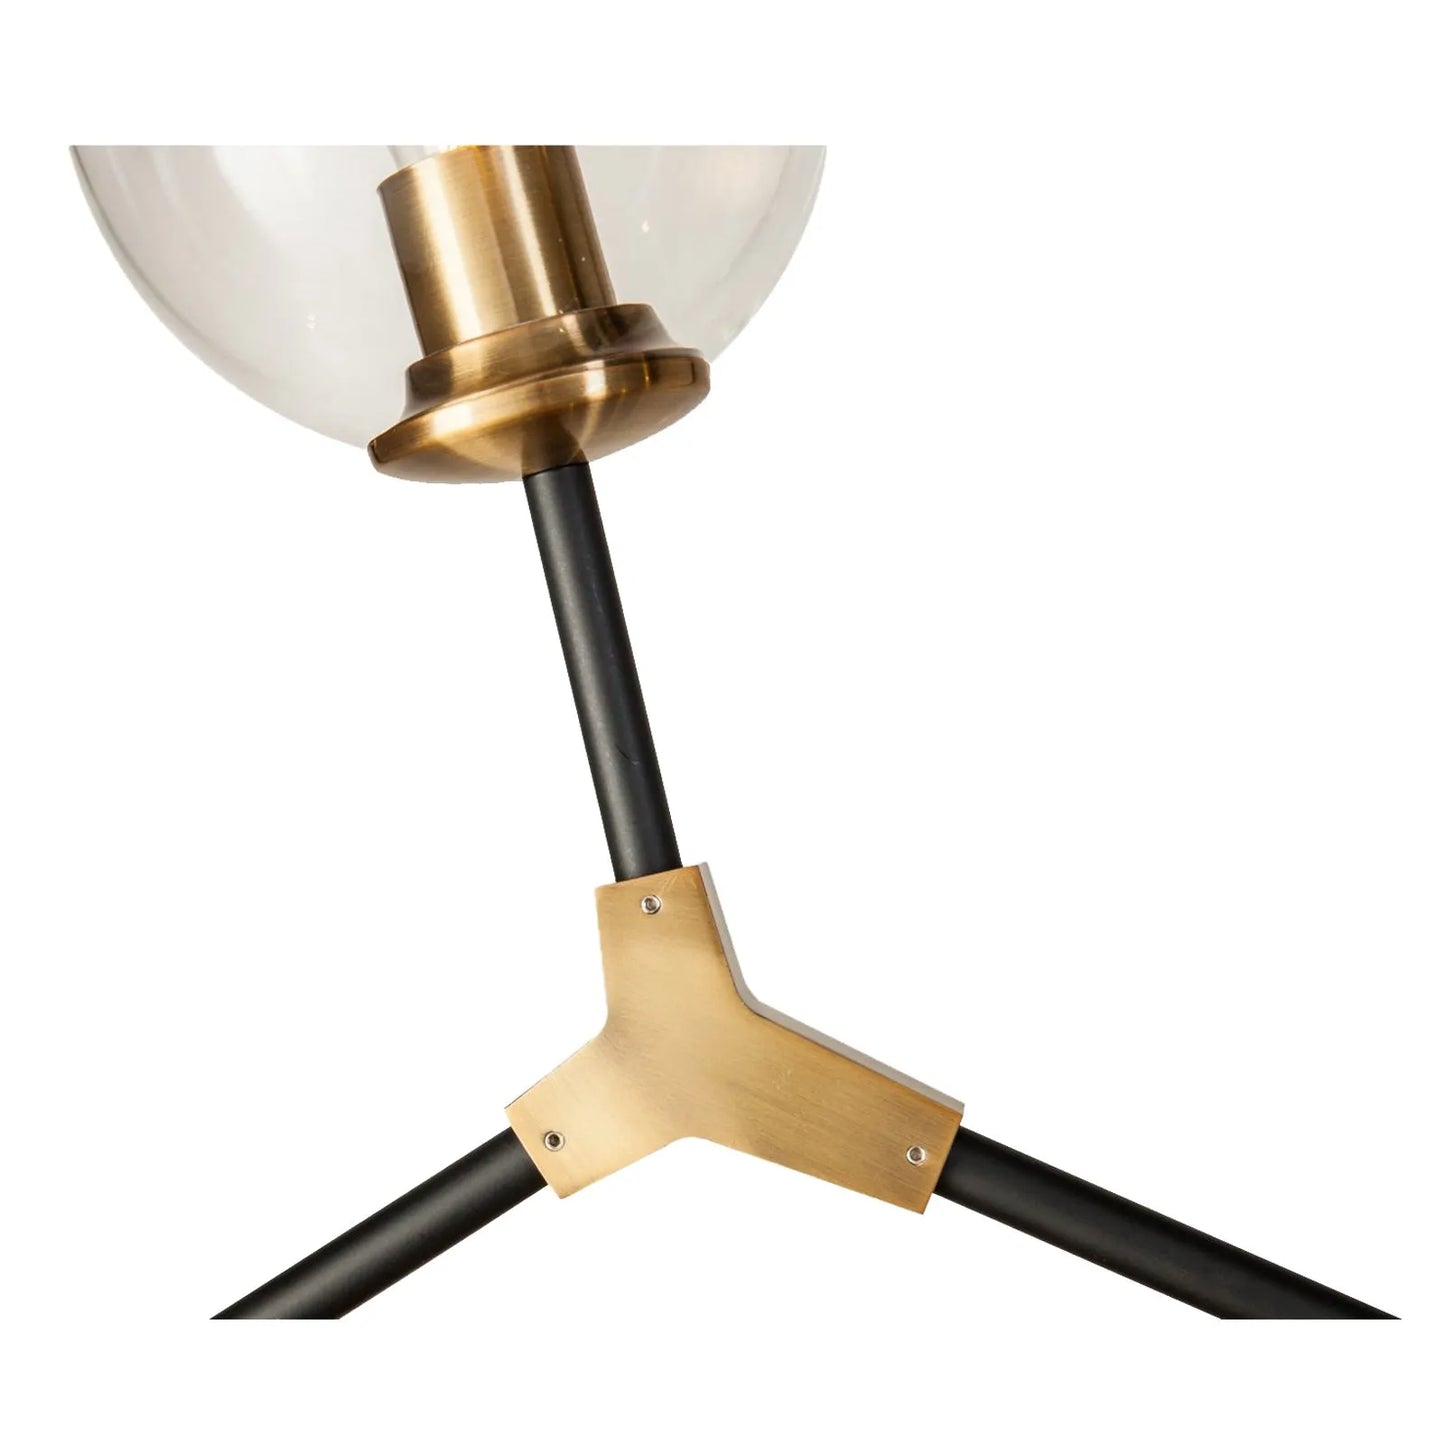 Orbital Gold Large Pendant Lamp